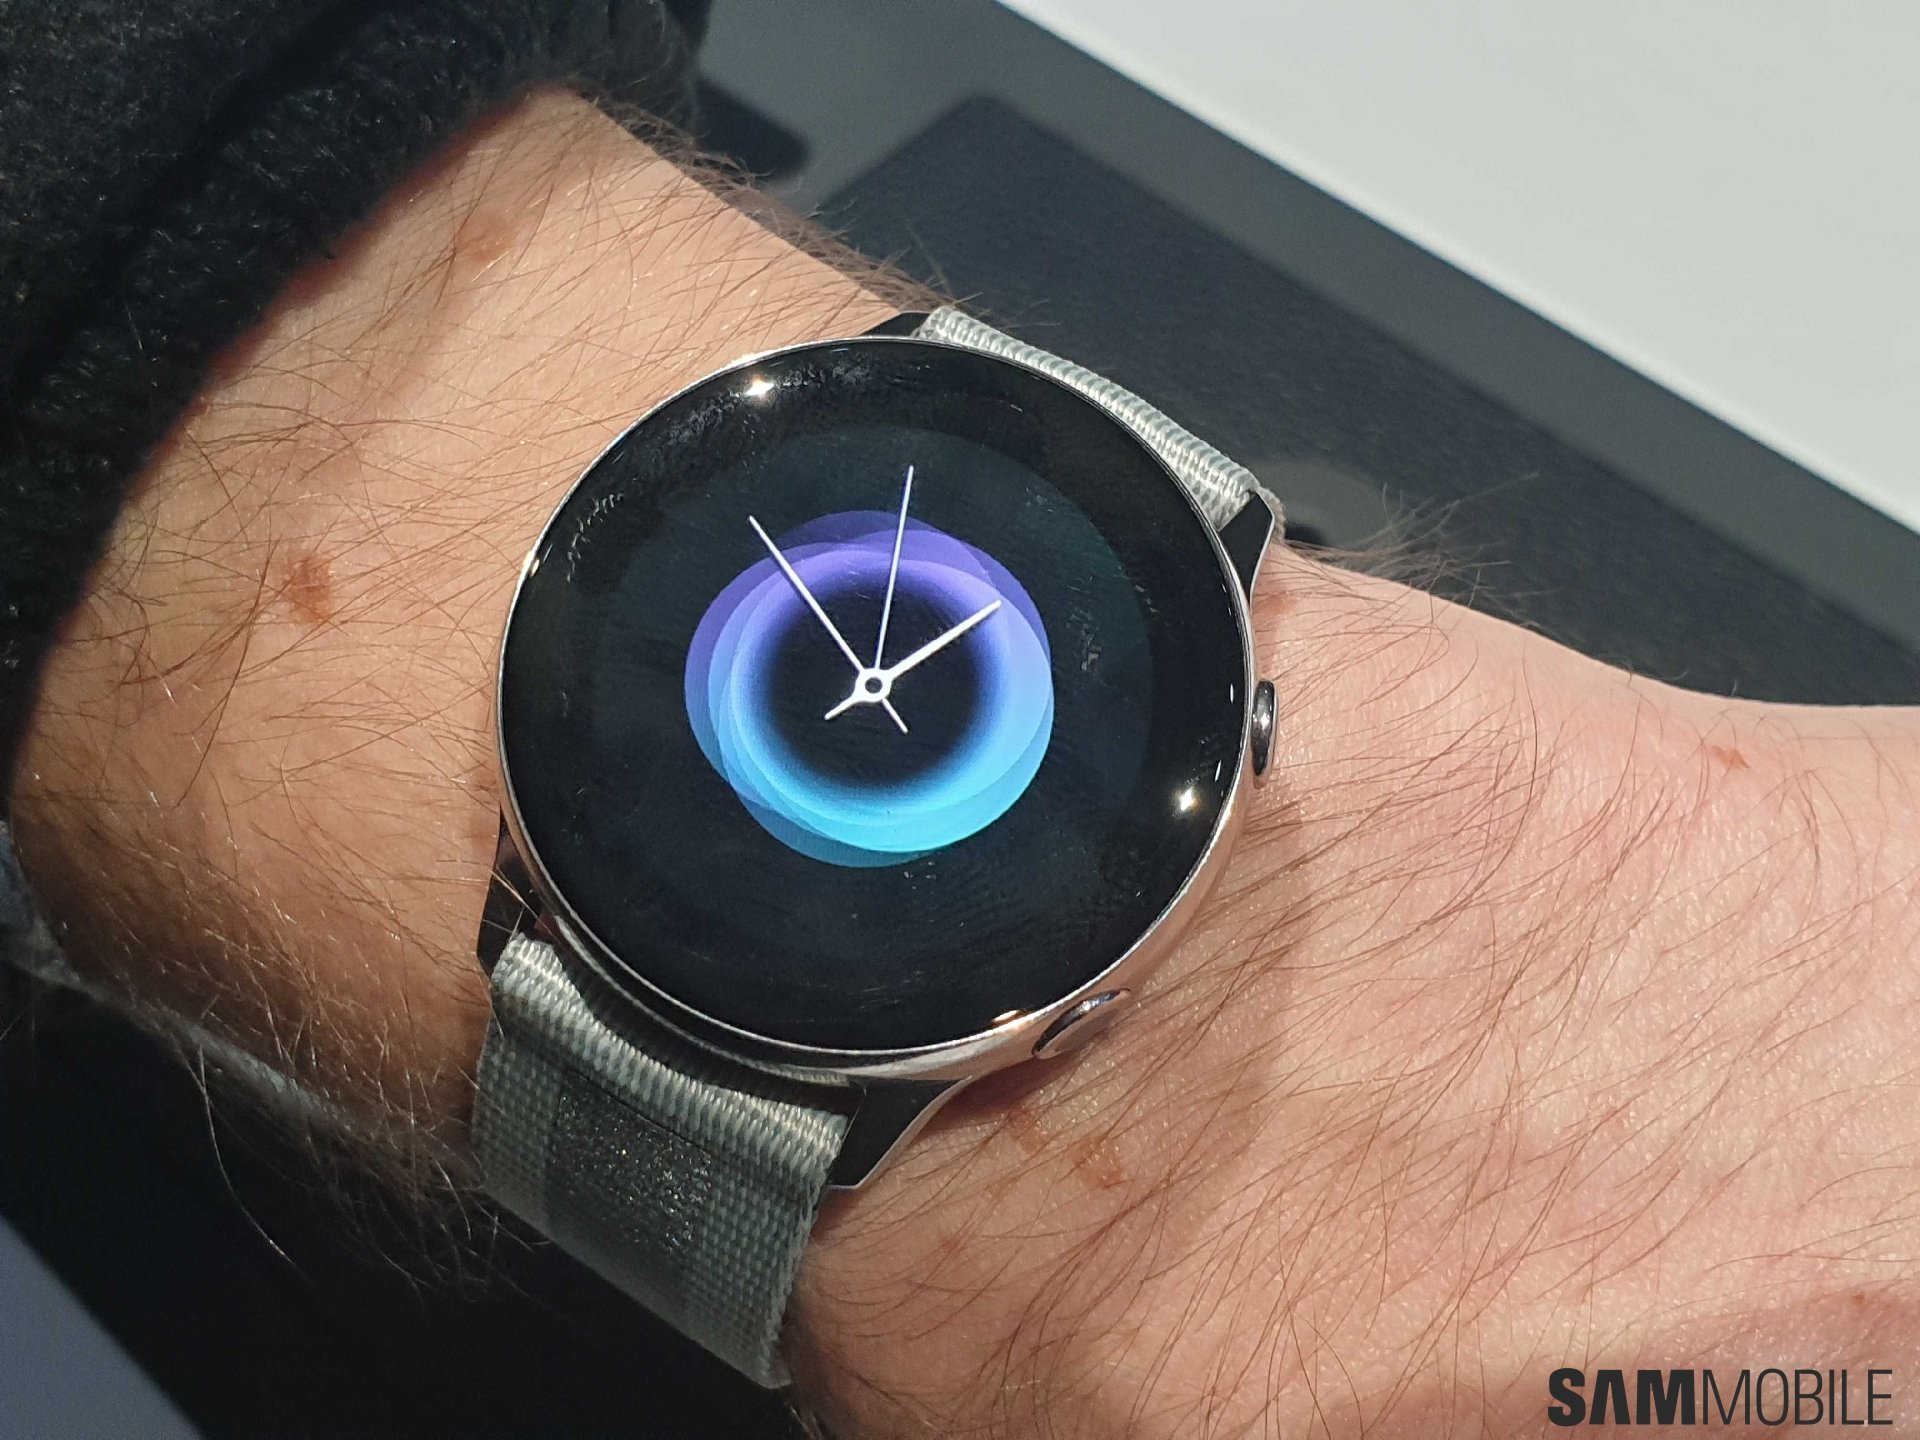 Samsung Galaxy Watch Active hands-on 